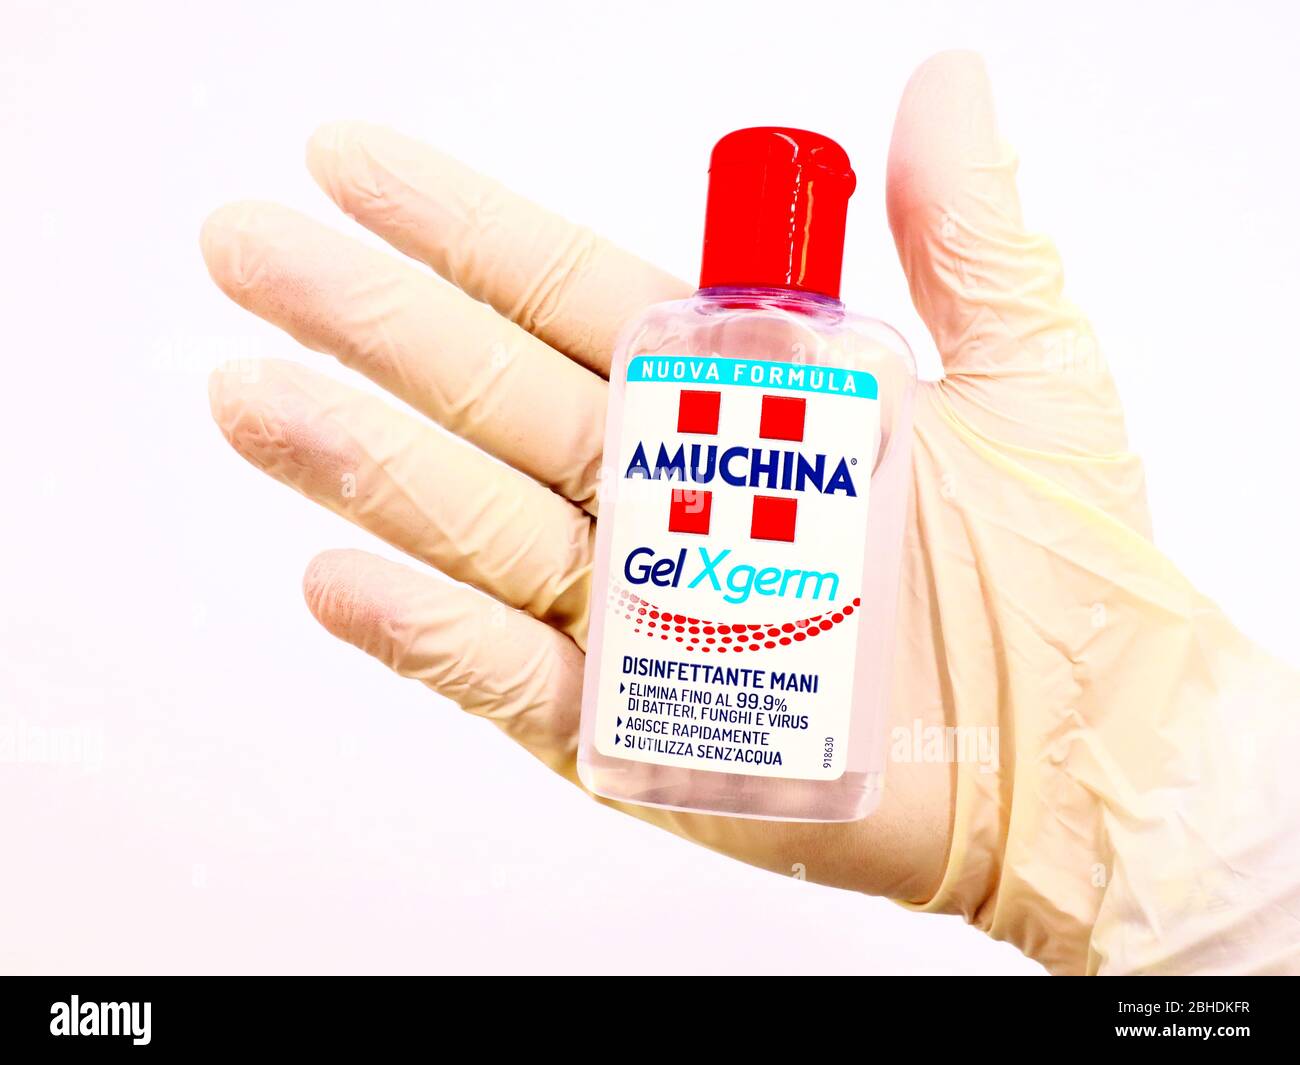 AMUCHINA Gel XGERM Hand Sanitizer. Liquid used to decrease infectious agent  Virus, Fungi and Bacteria. AMUCHINA is an Italian brand of ACRAF ANGELINI  Stock Photo - Alamy